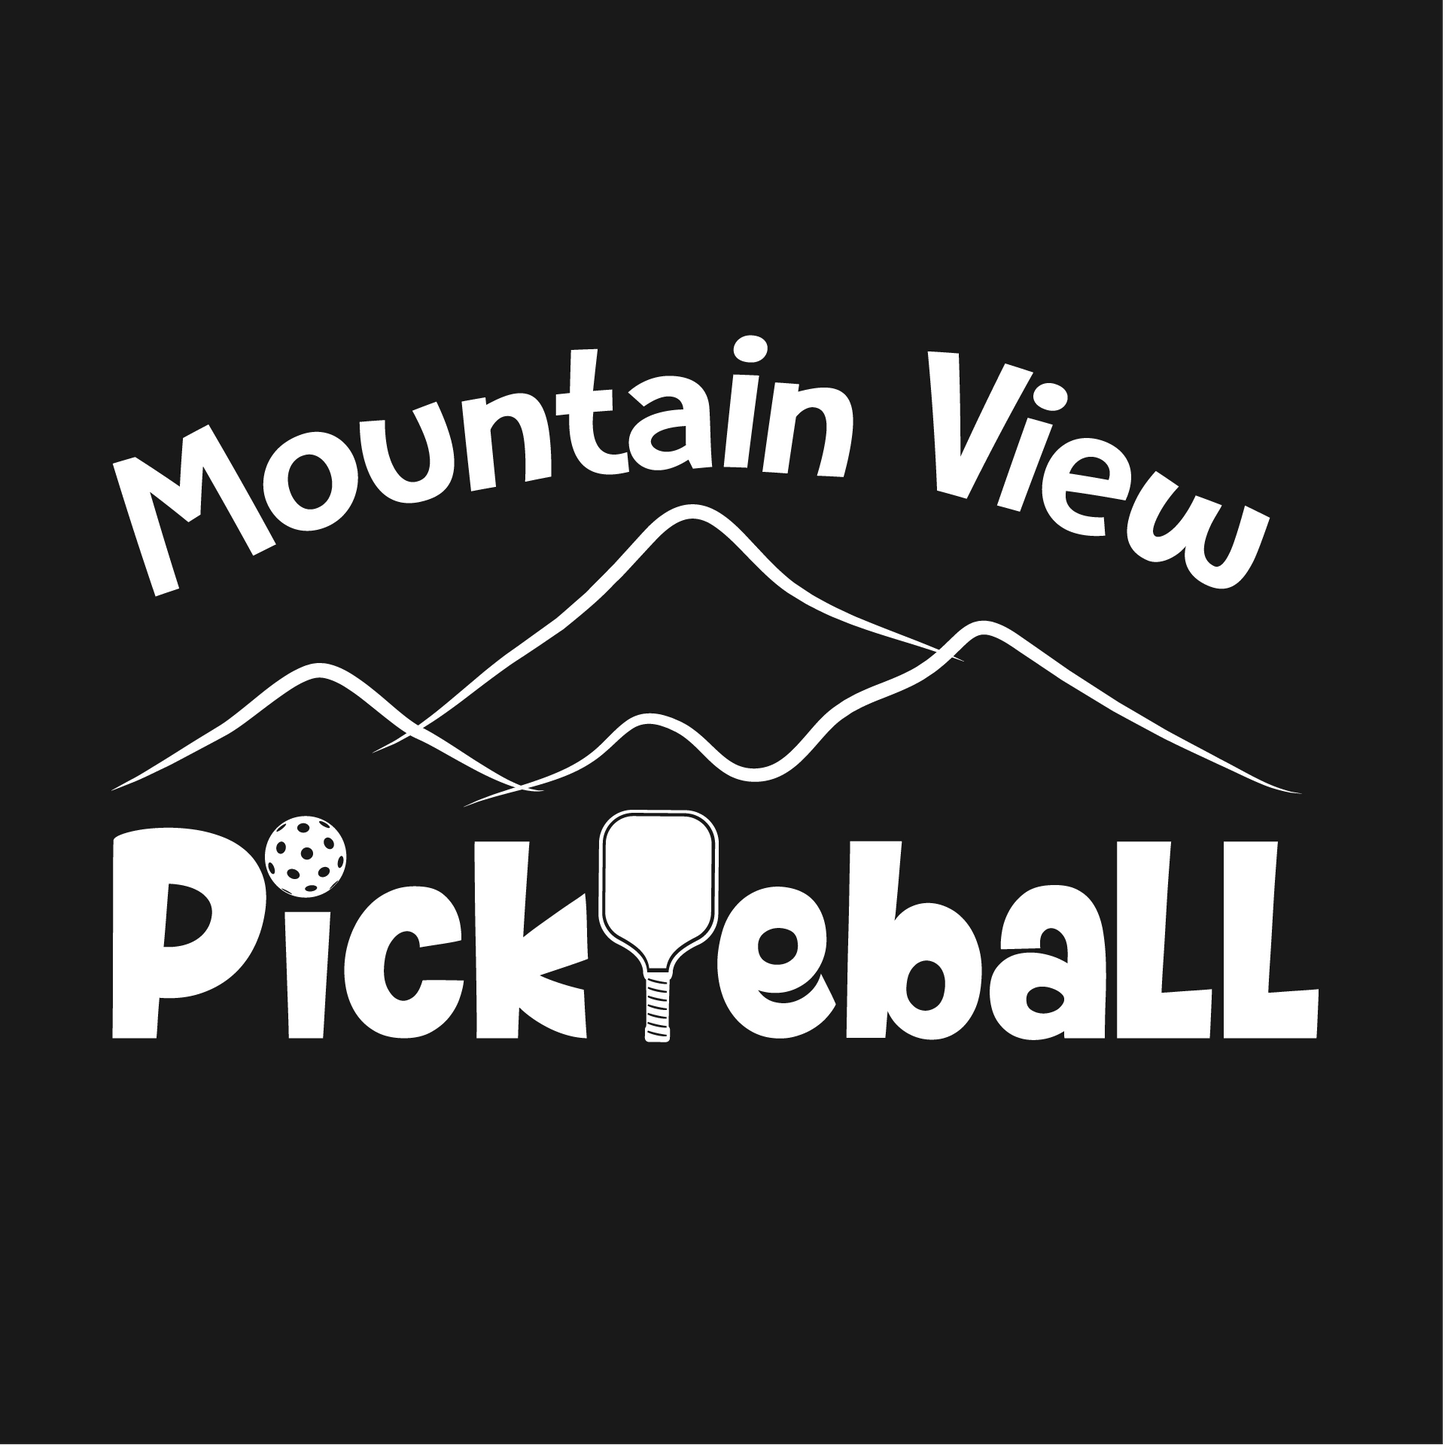 Mountain View Pickleball Club | Men's Long Sleeve Pickleball Shirt | 100% Polyester